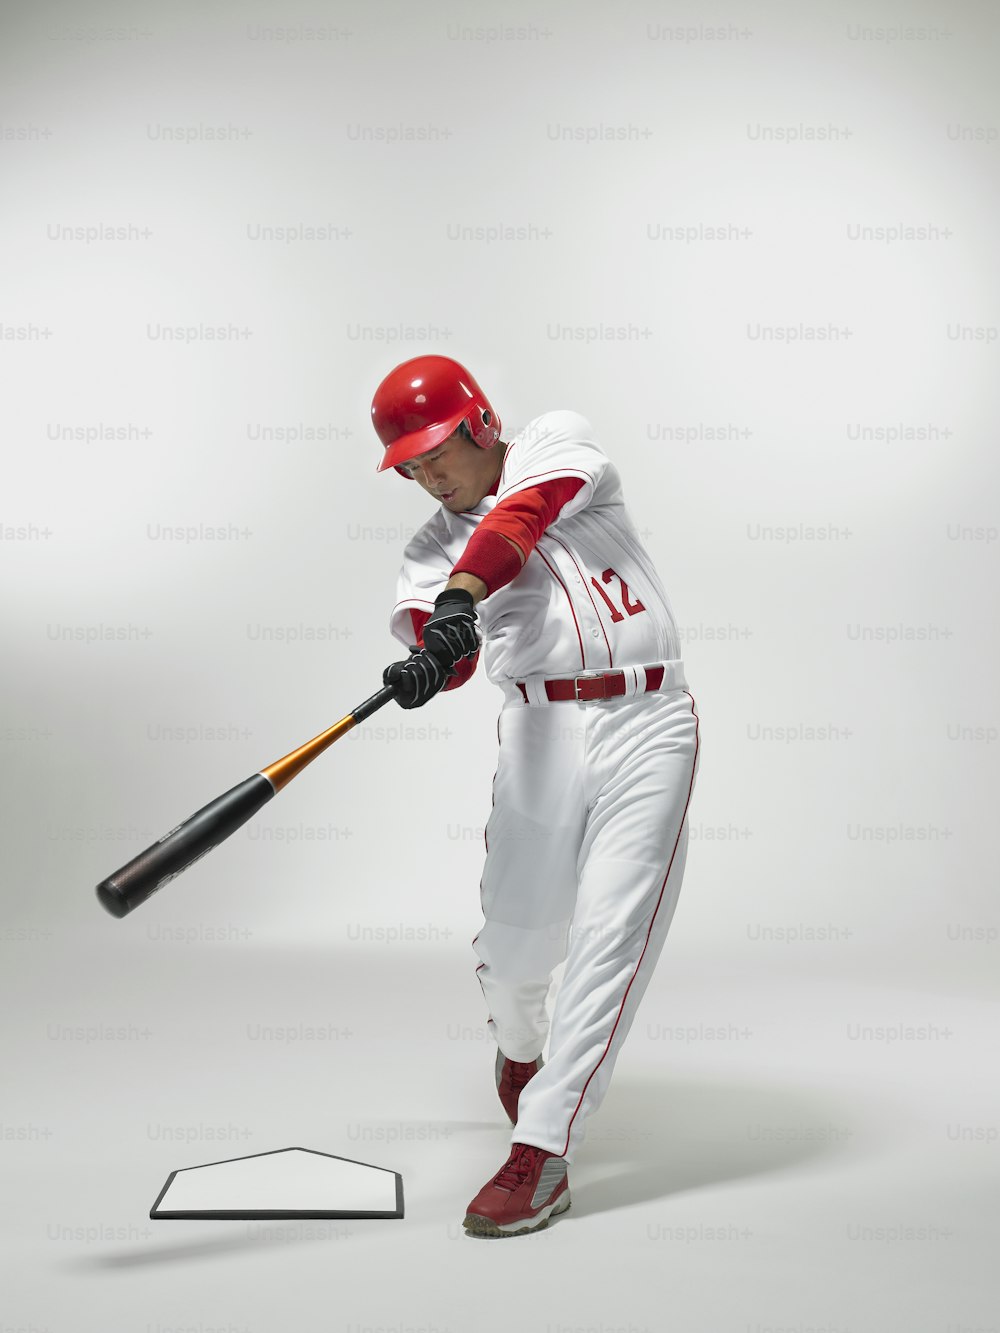 a man in a baseball uniform swinging a bat